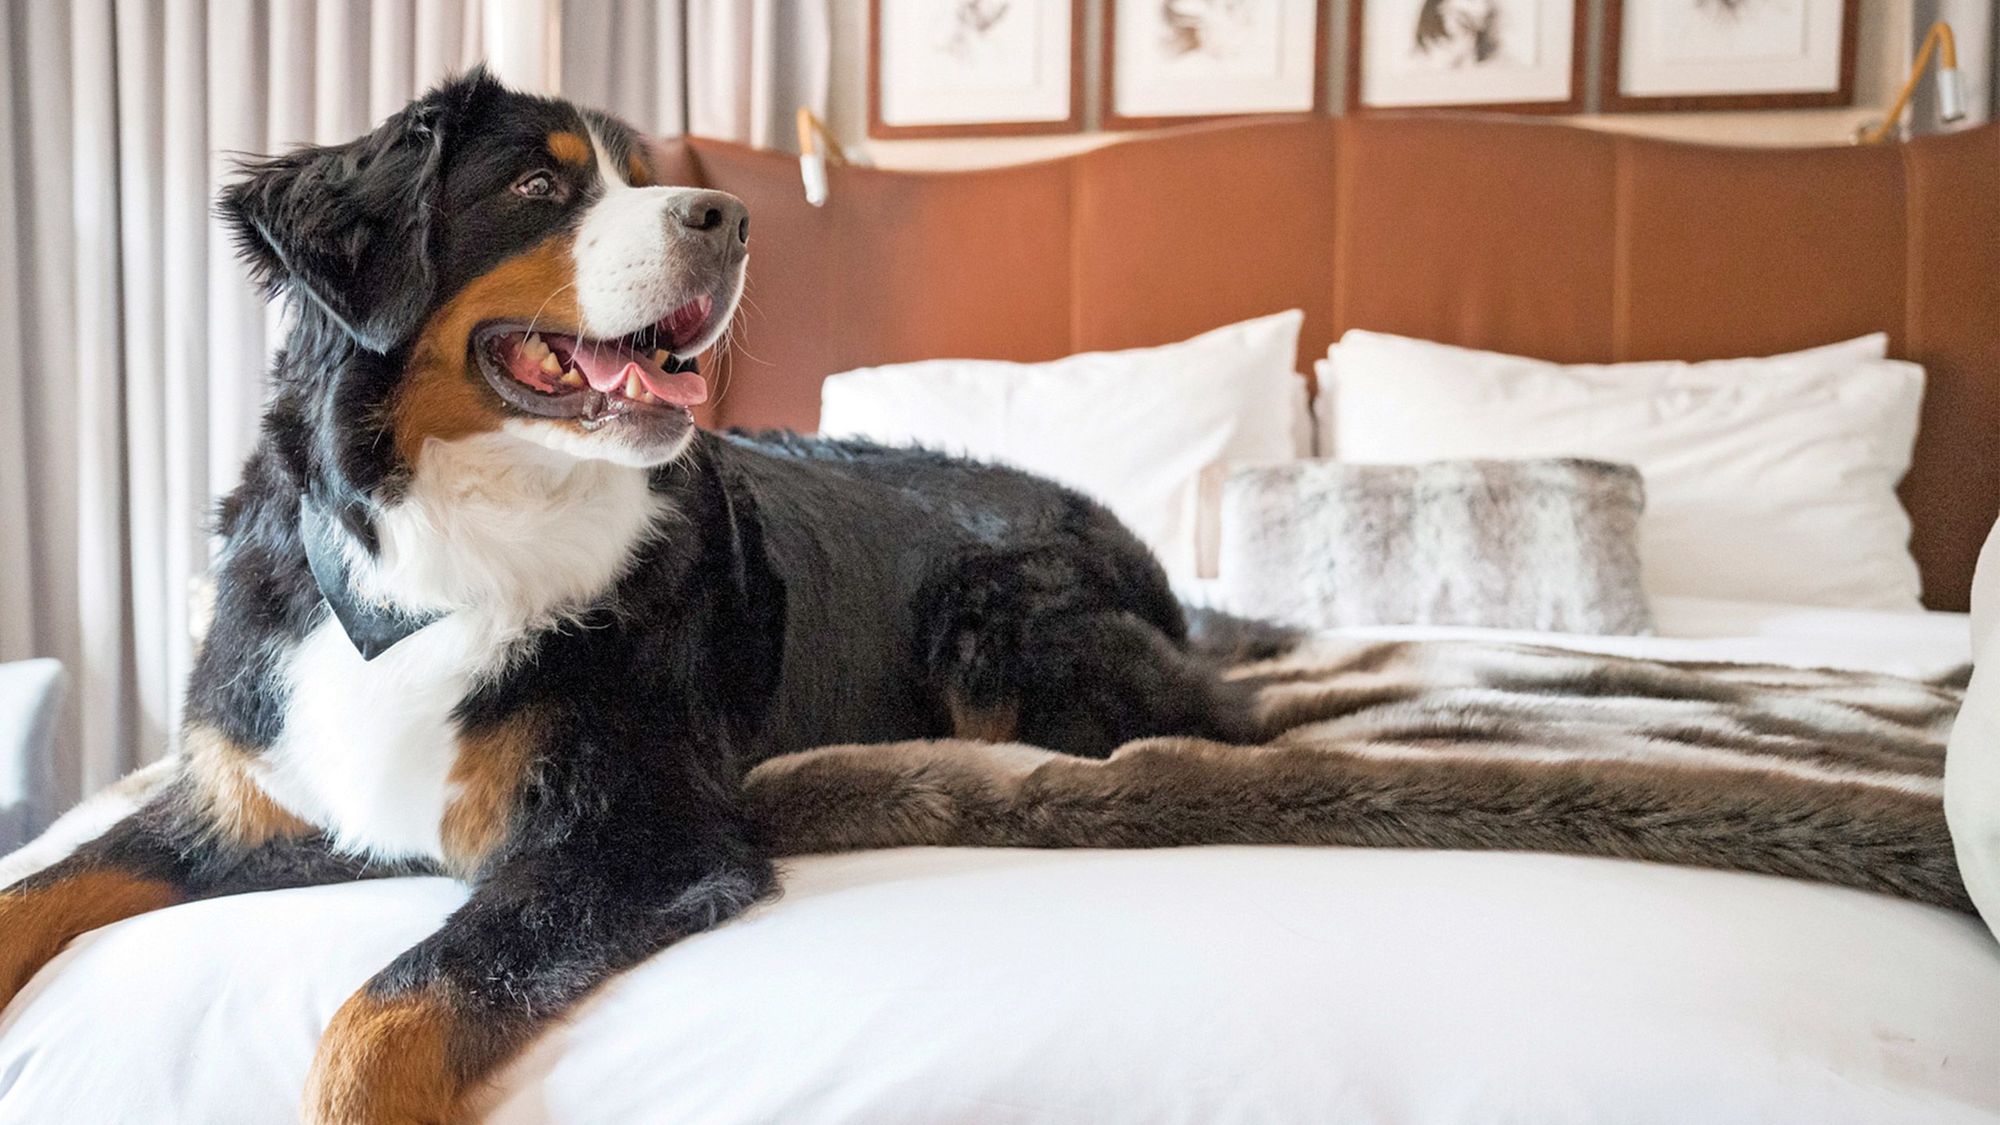 Dog Friendly Hotels